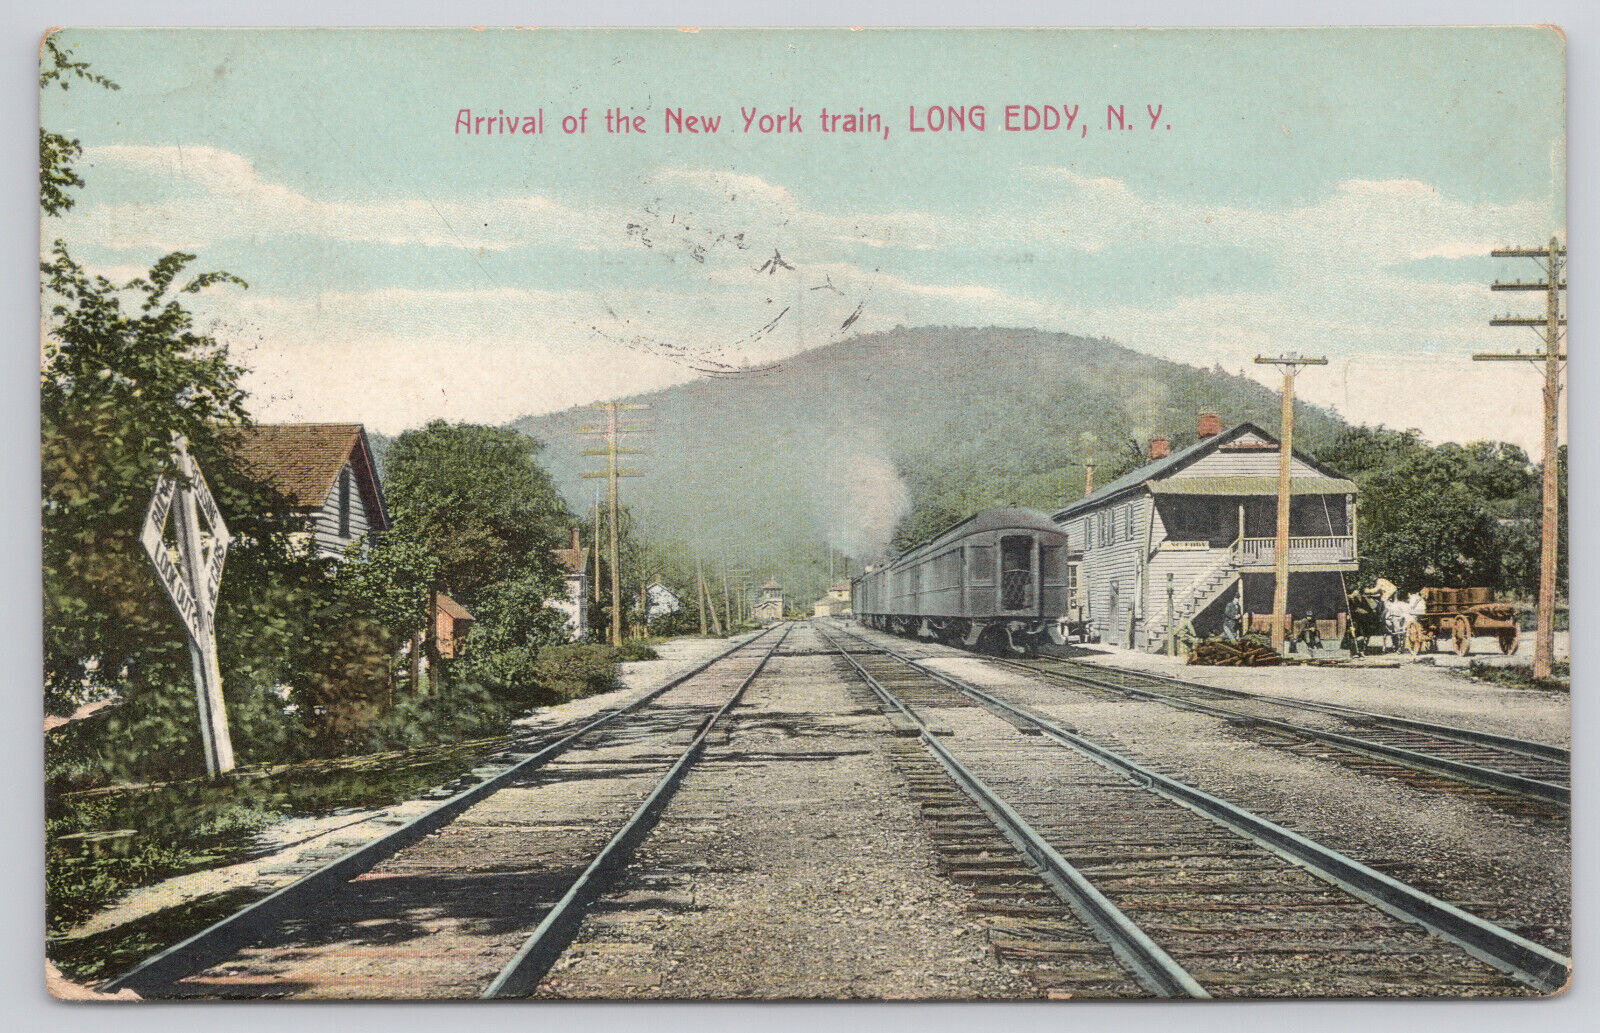 Long Eddy New York Arrival of the New York Train Postcard 1912